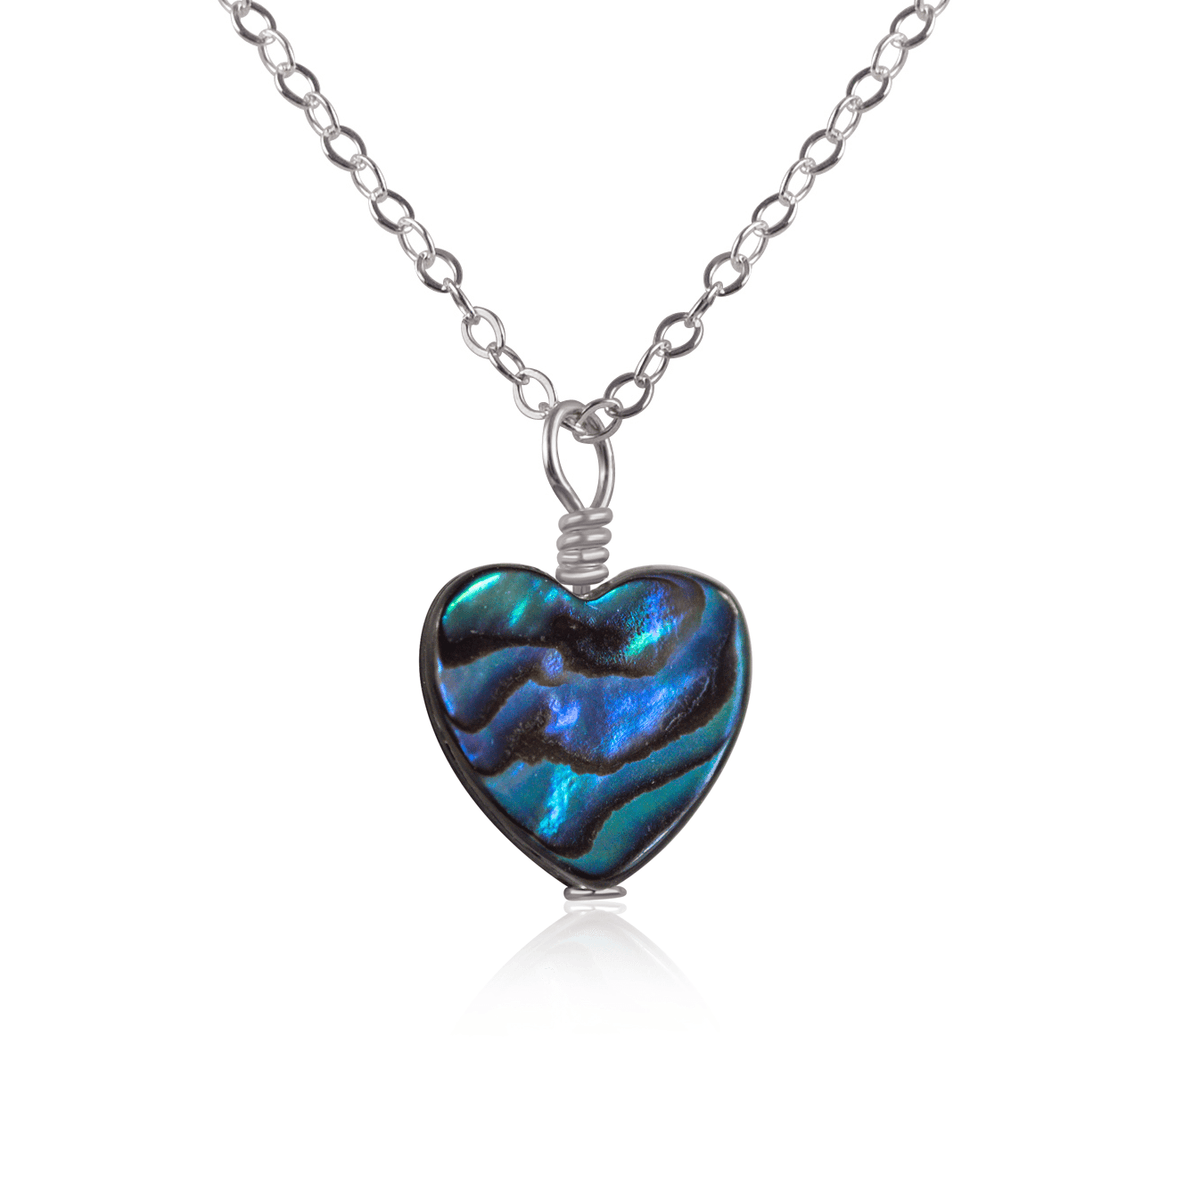 Abalone Shell Heart Pendant Necklace - Abalone Shell Heart Pendant Necklace - Stainless Steel / Cable - Luna Tide Handmade Crystal Jewellery